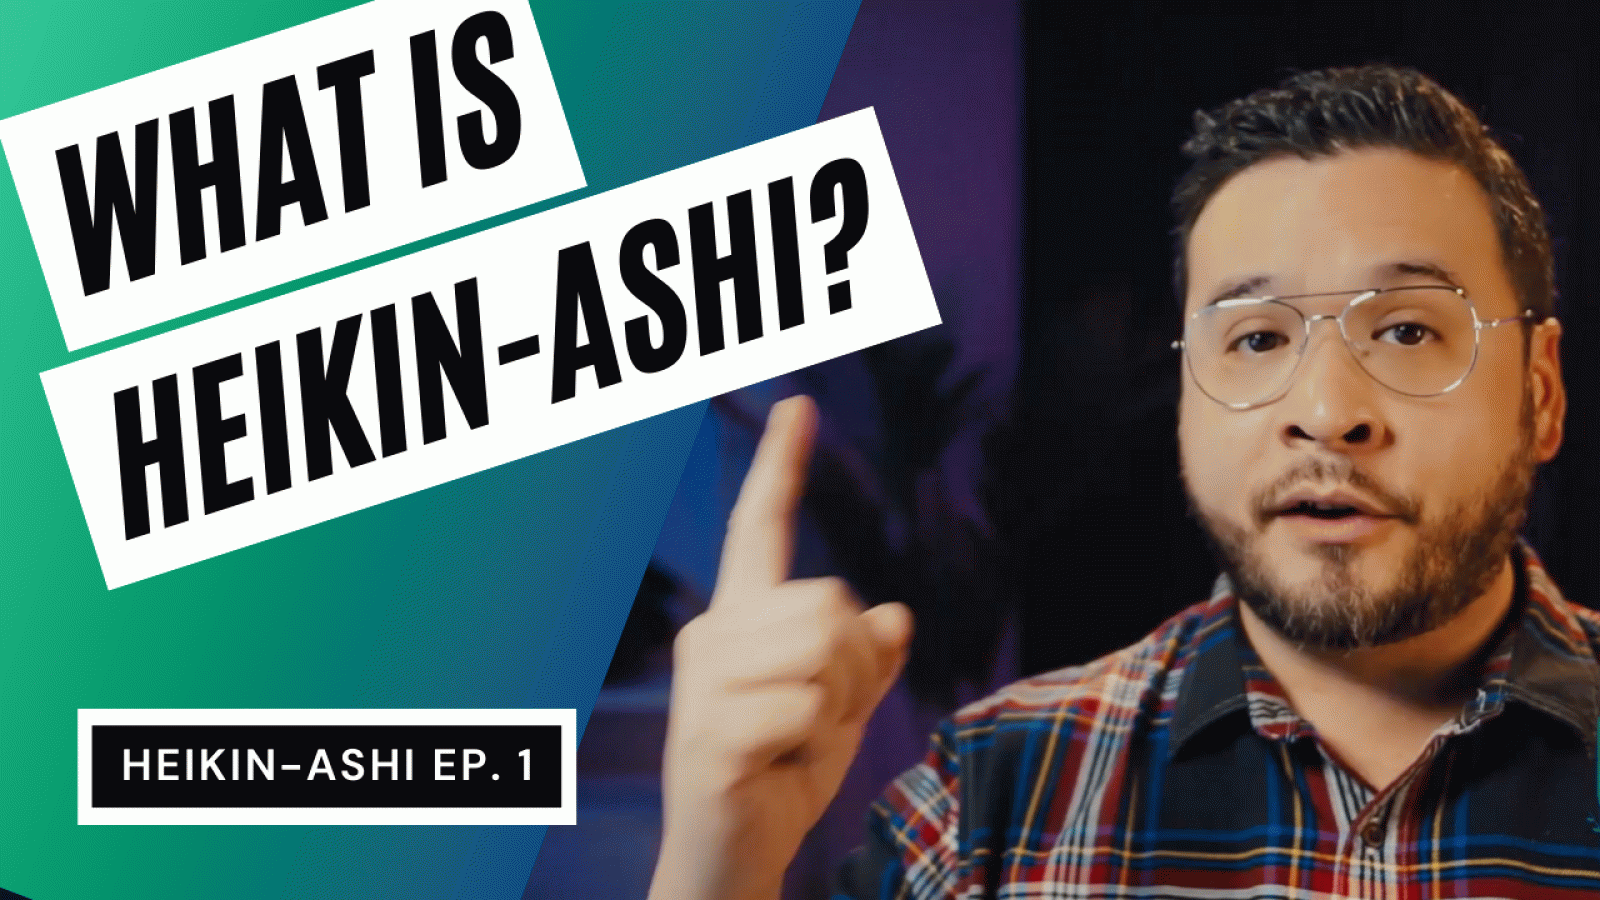 Heikin-Ashi Episode 1 What is Heikin-Ashi?